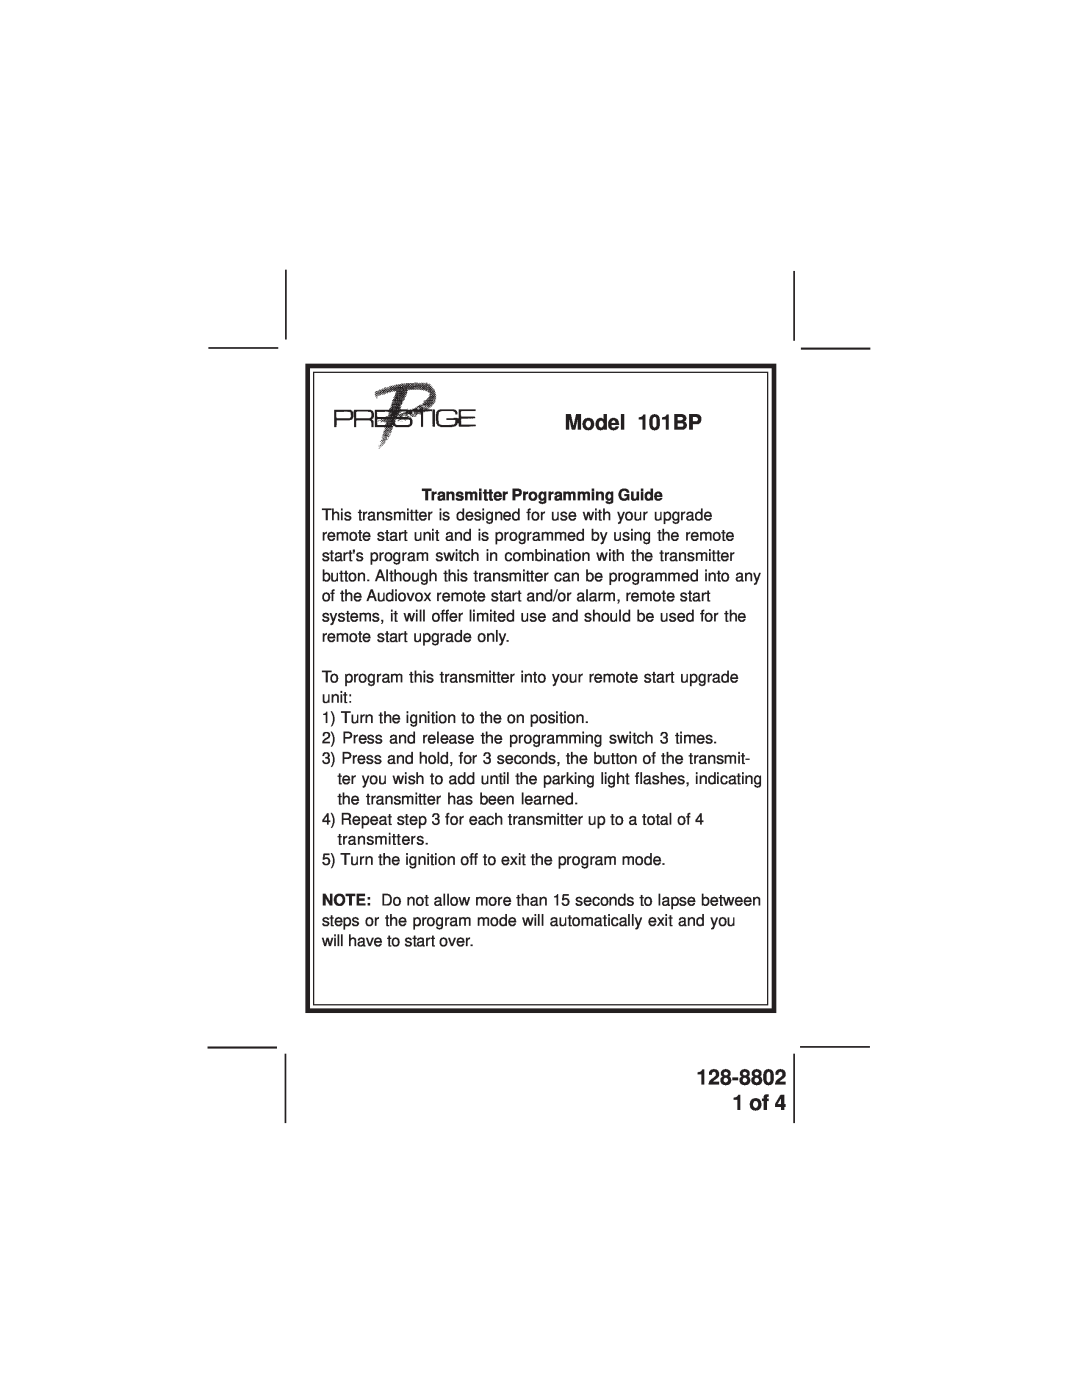 Audiovox manual Model 101BP, 128-8802 1 of, Transmitter Programming Guide 